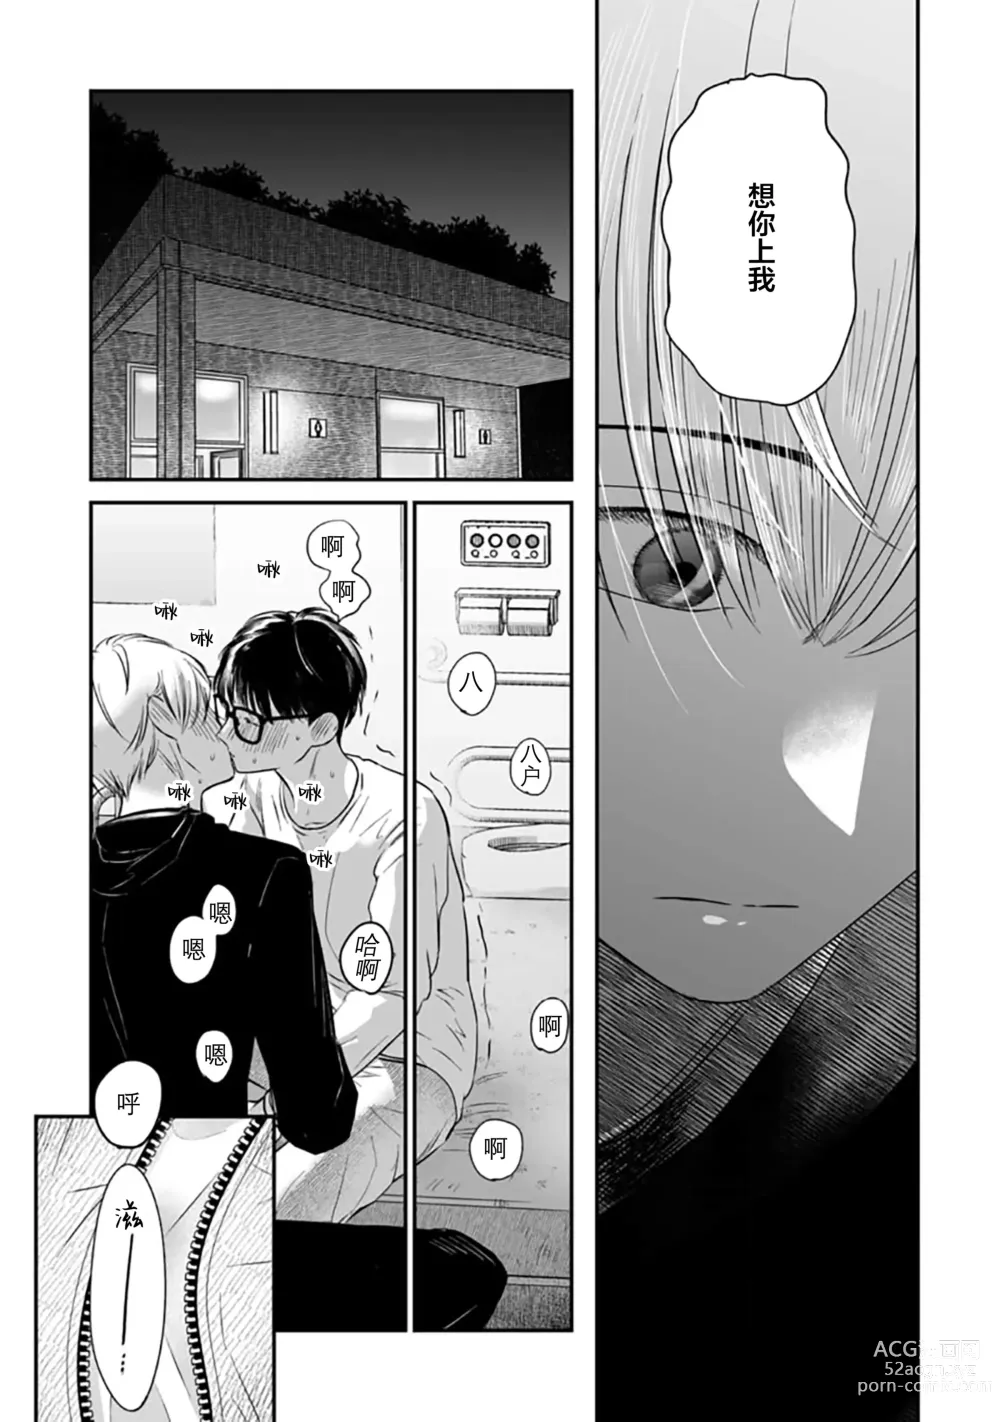 Page 296 of manga 渴望褪下制服